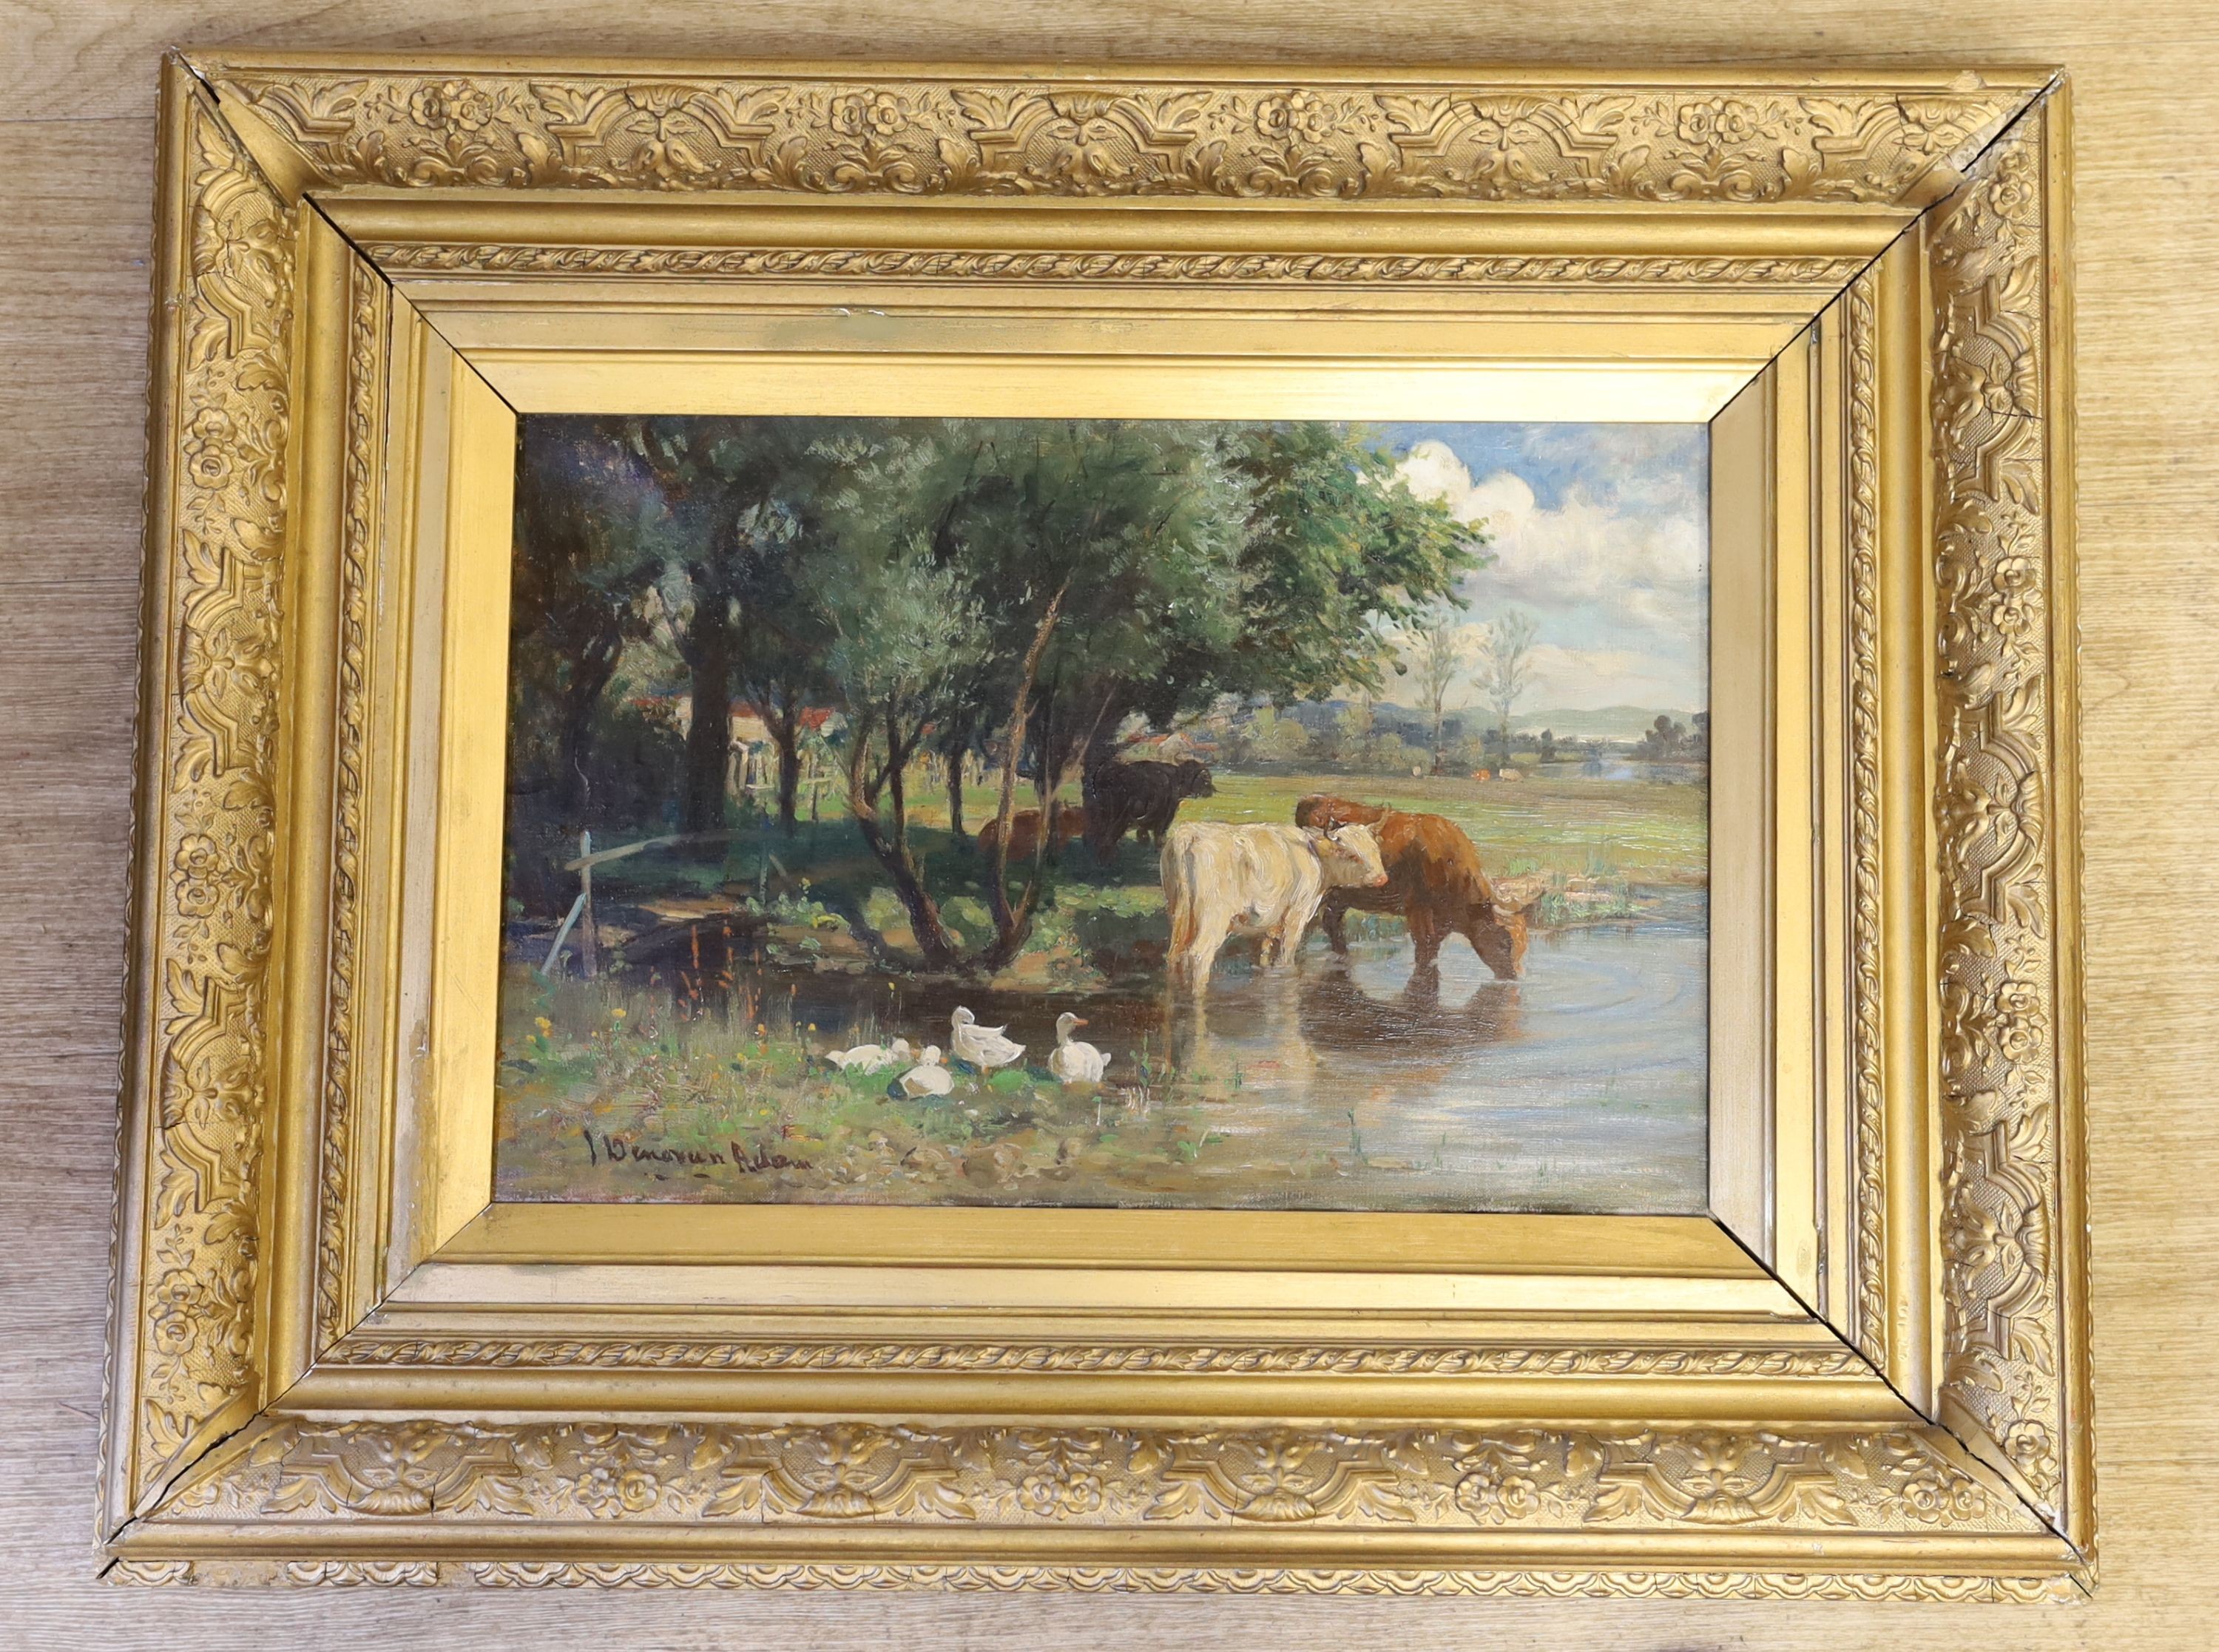 Joseph Denovan Adam (1842-1896), oil on canvas, Cattle and ducks beside a stream, signed, 30 x 45cm